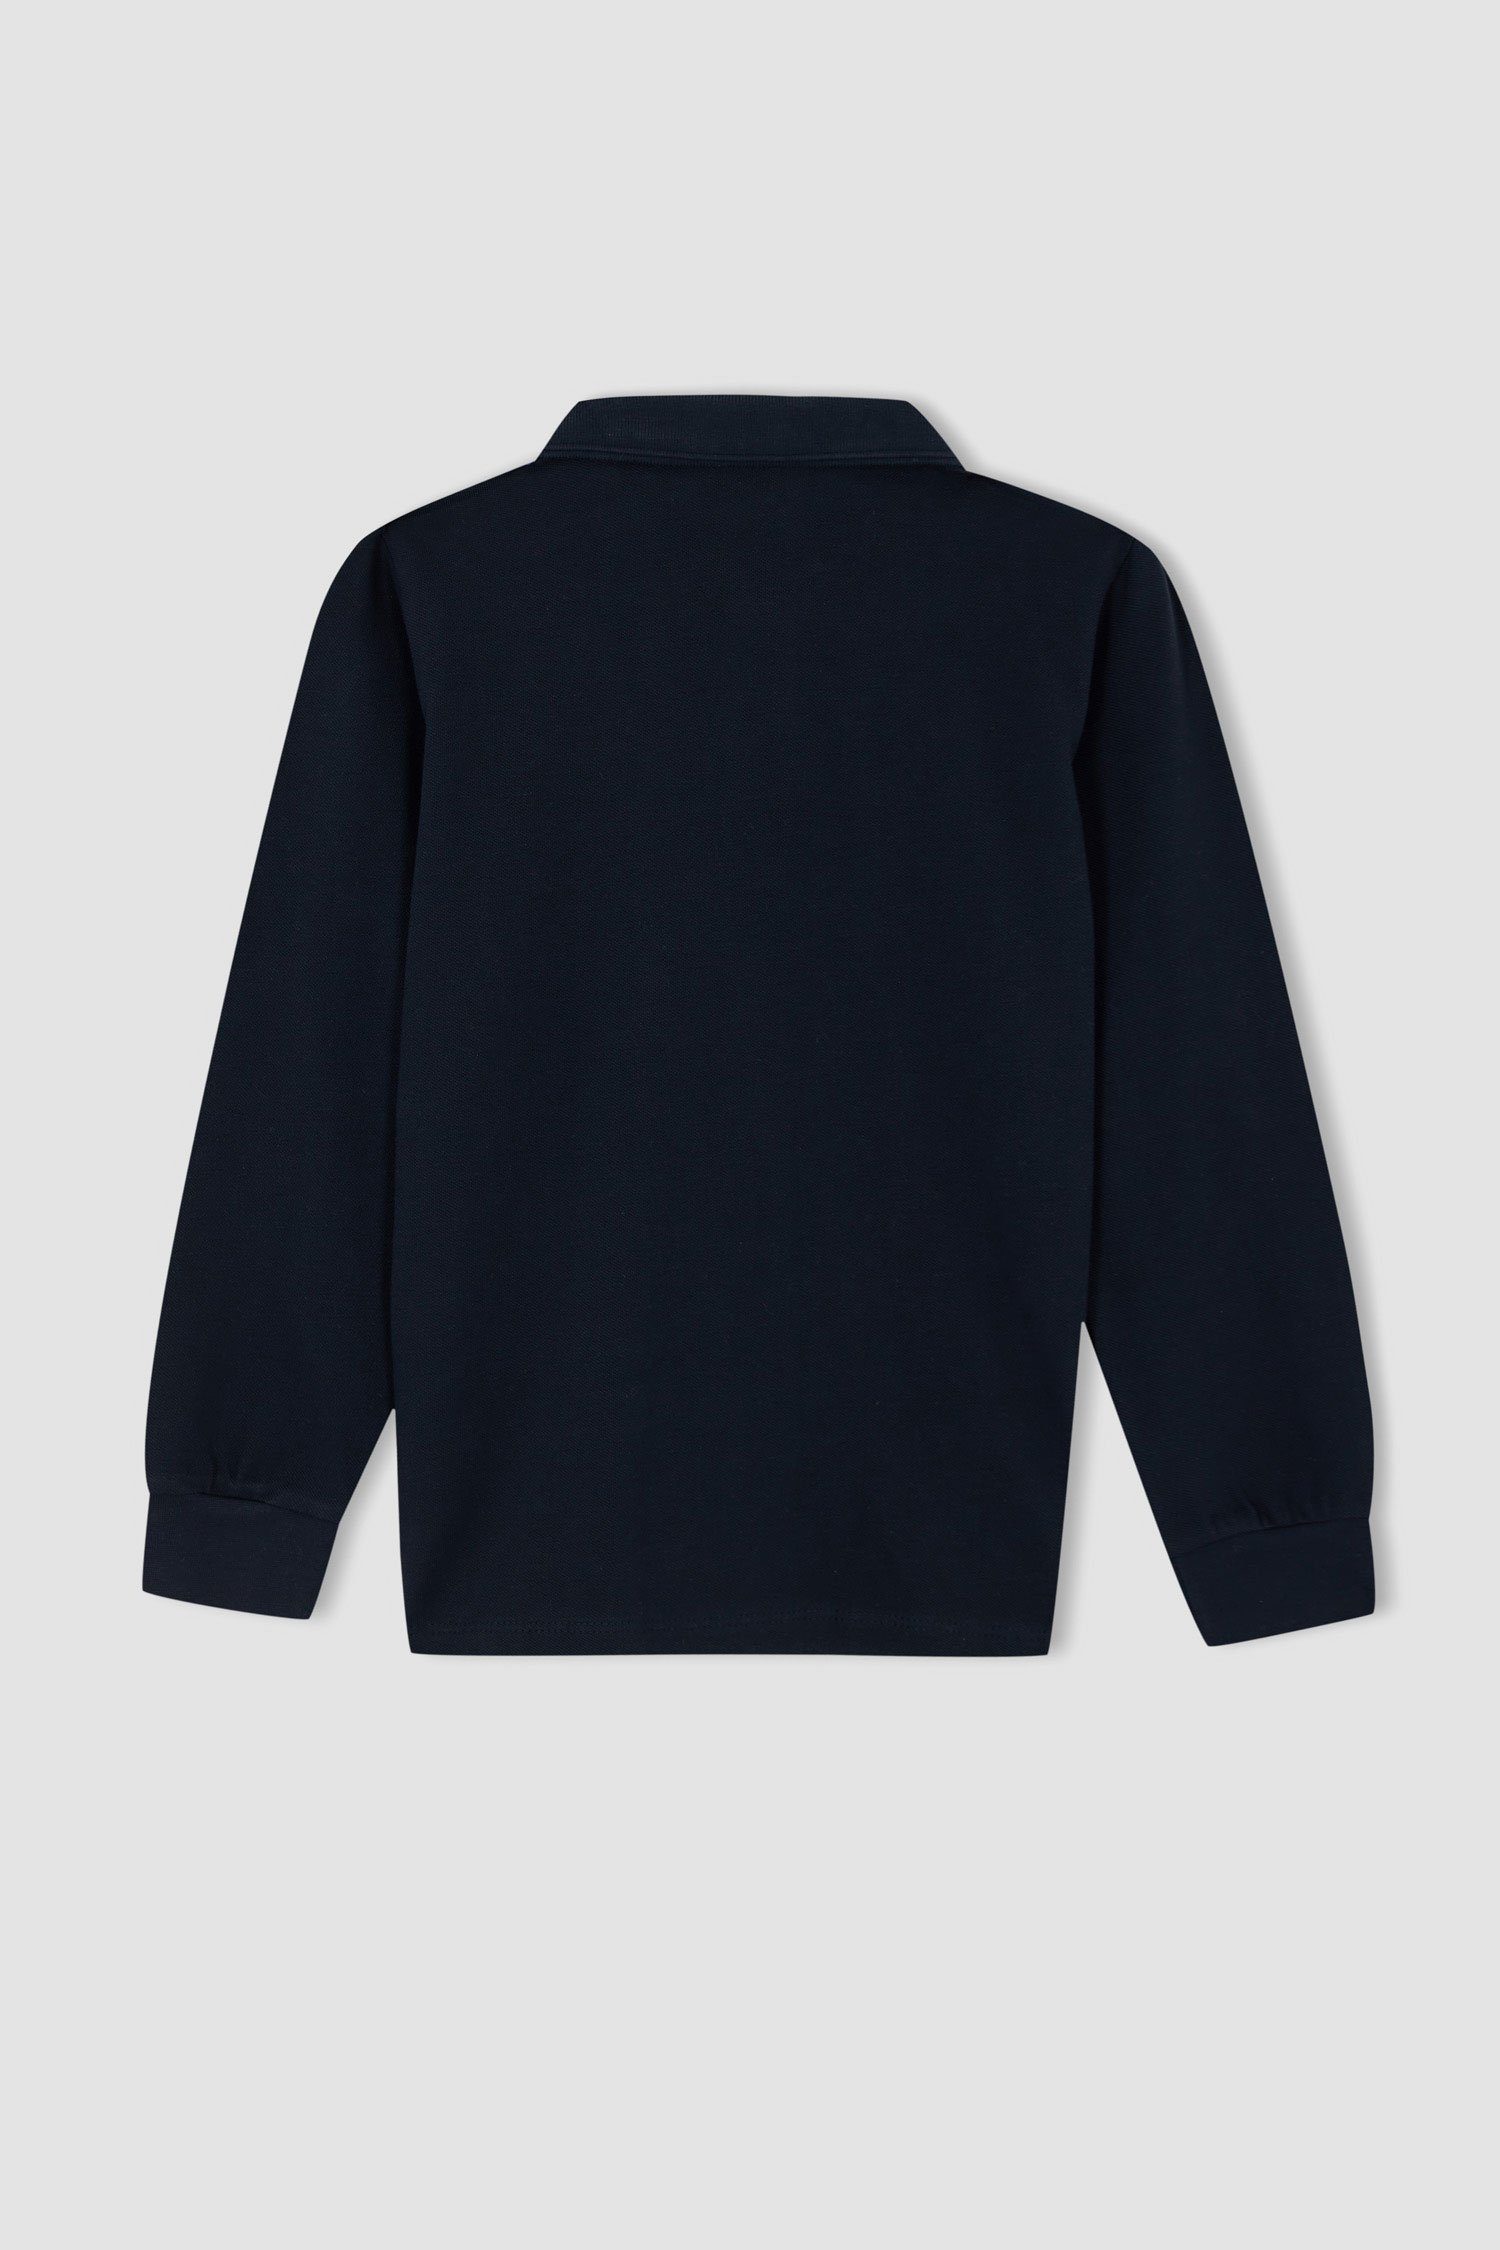 T-Shirt FIT DeFacto Langarm-Poloshirt Polo Jungen REGULAR Marineblau